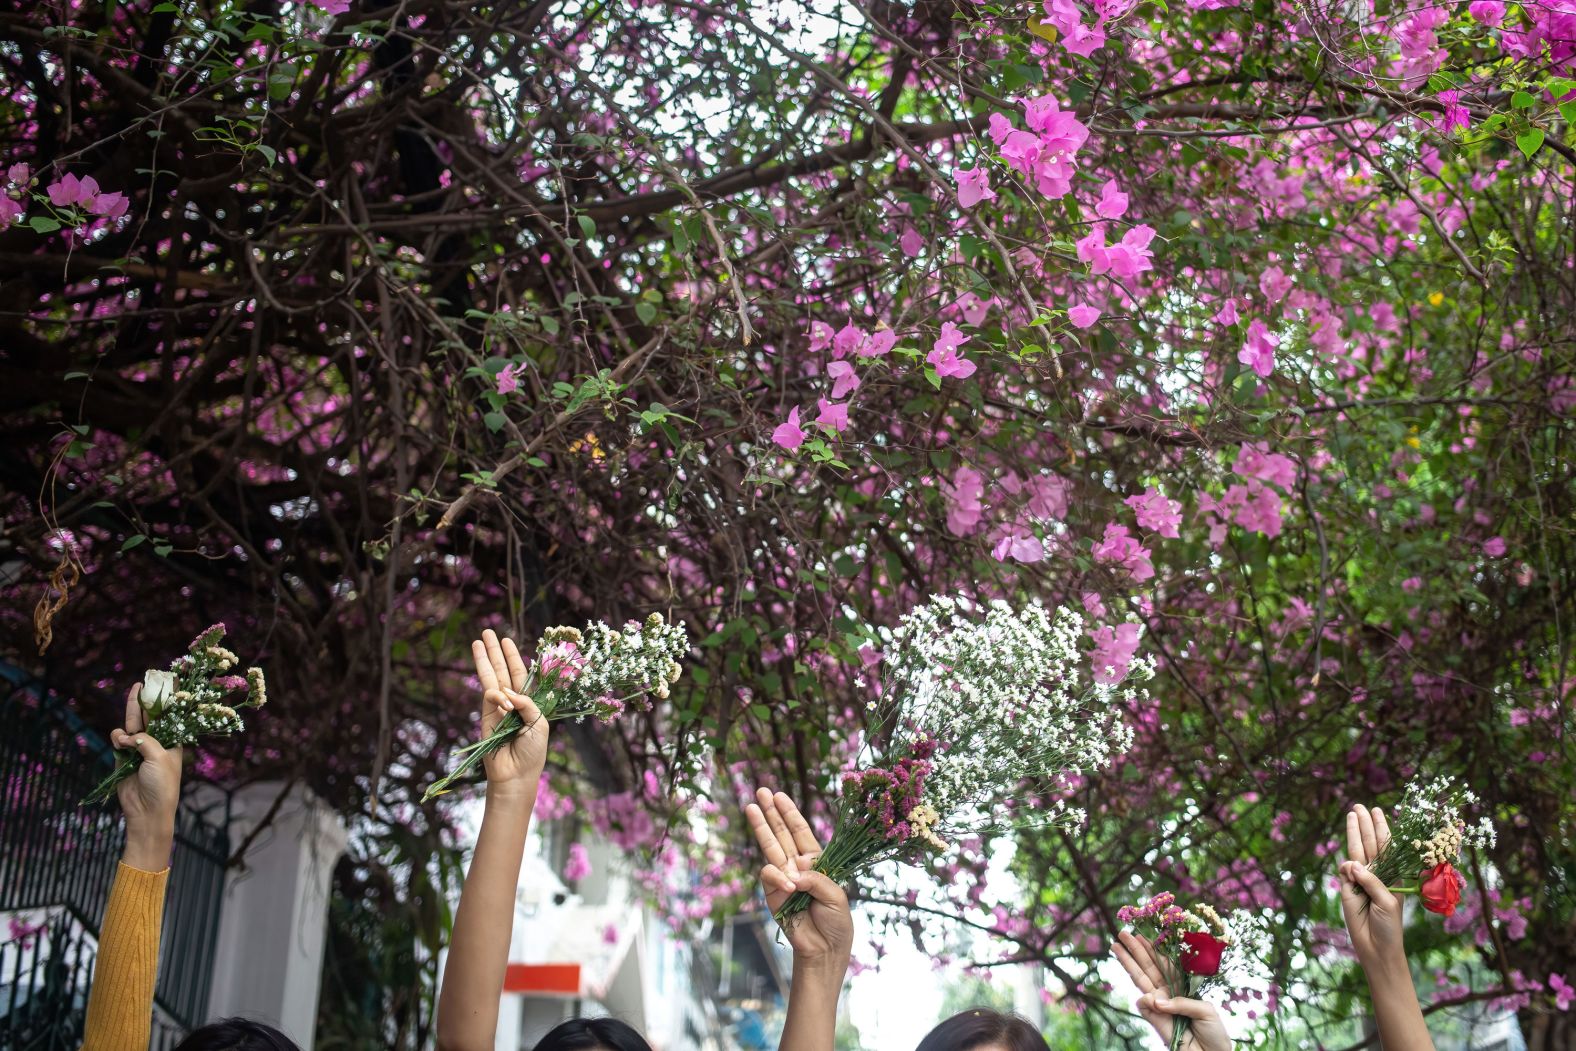 People take part in a "flower strike" in Yangon on April 2.